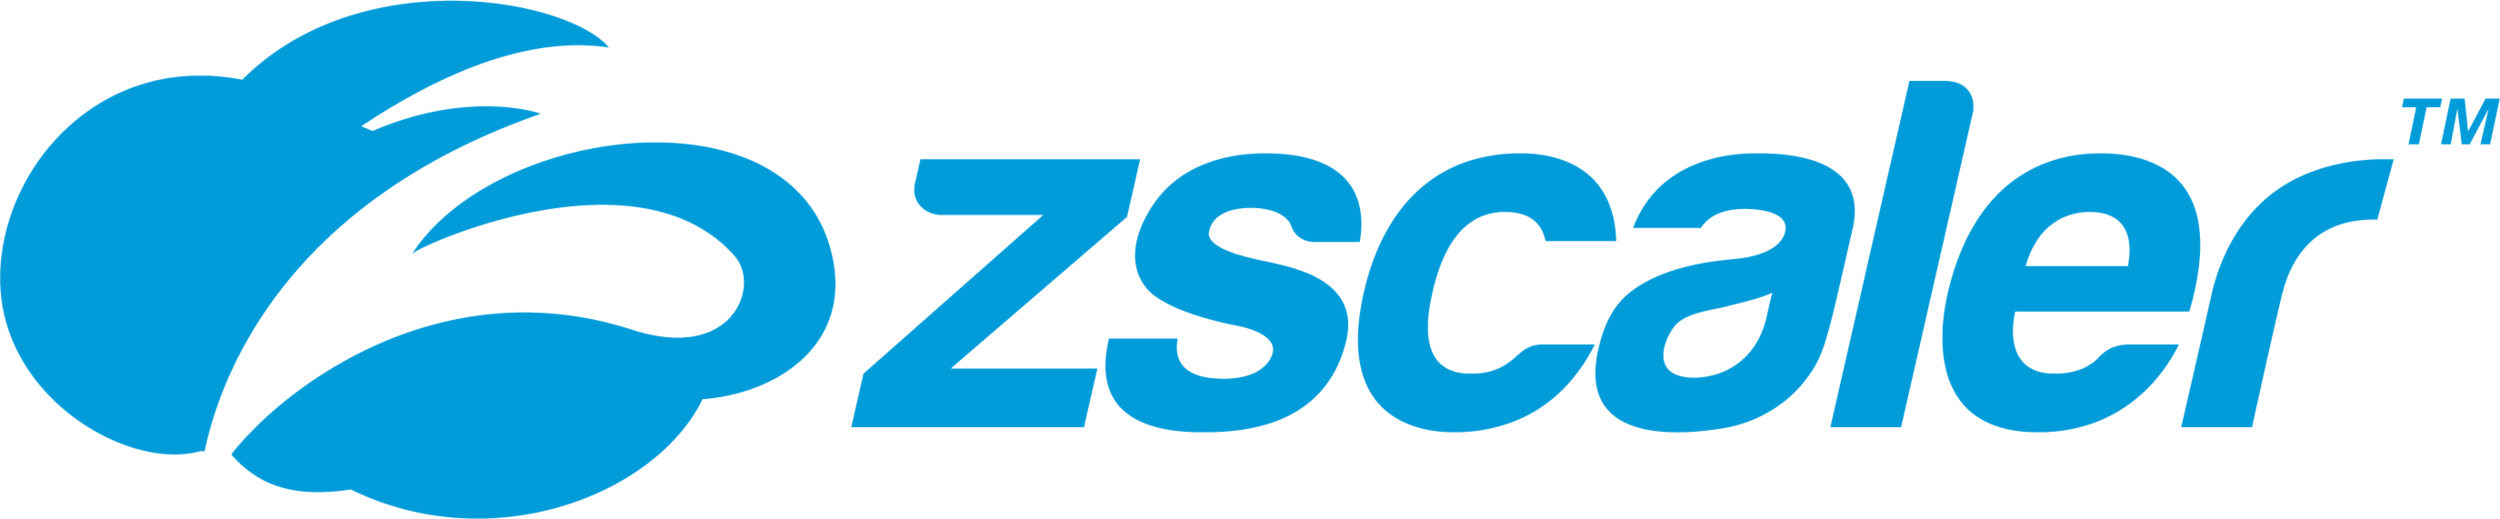 Zscaler-Logo-Horizontal-Blue-RGB-May2019.png